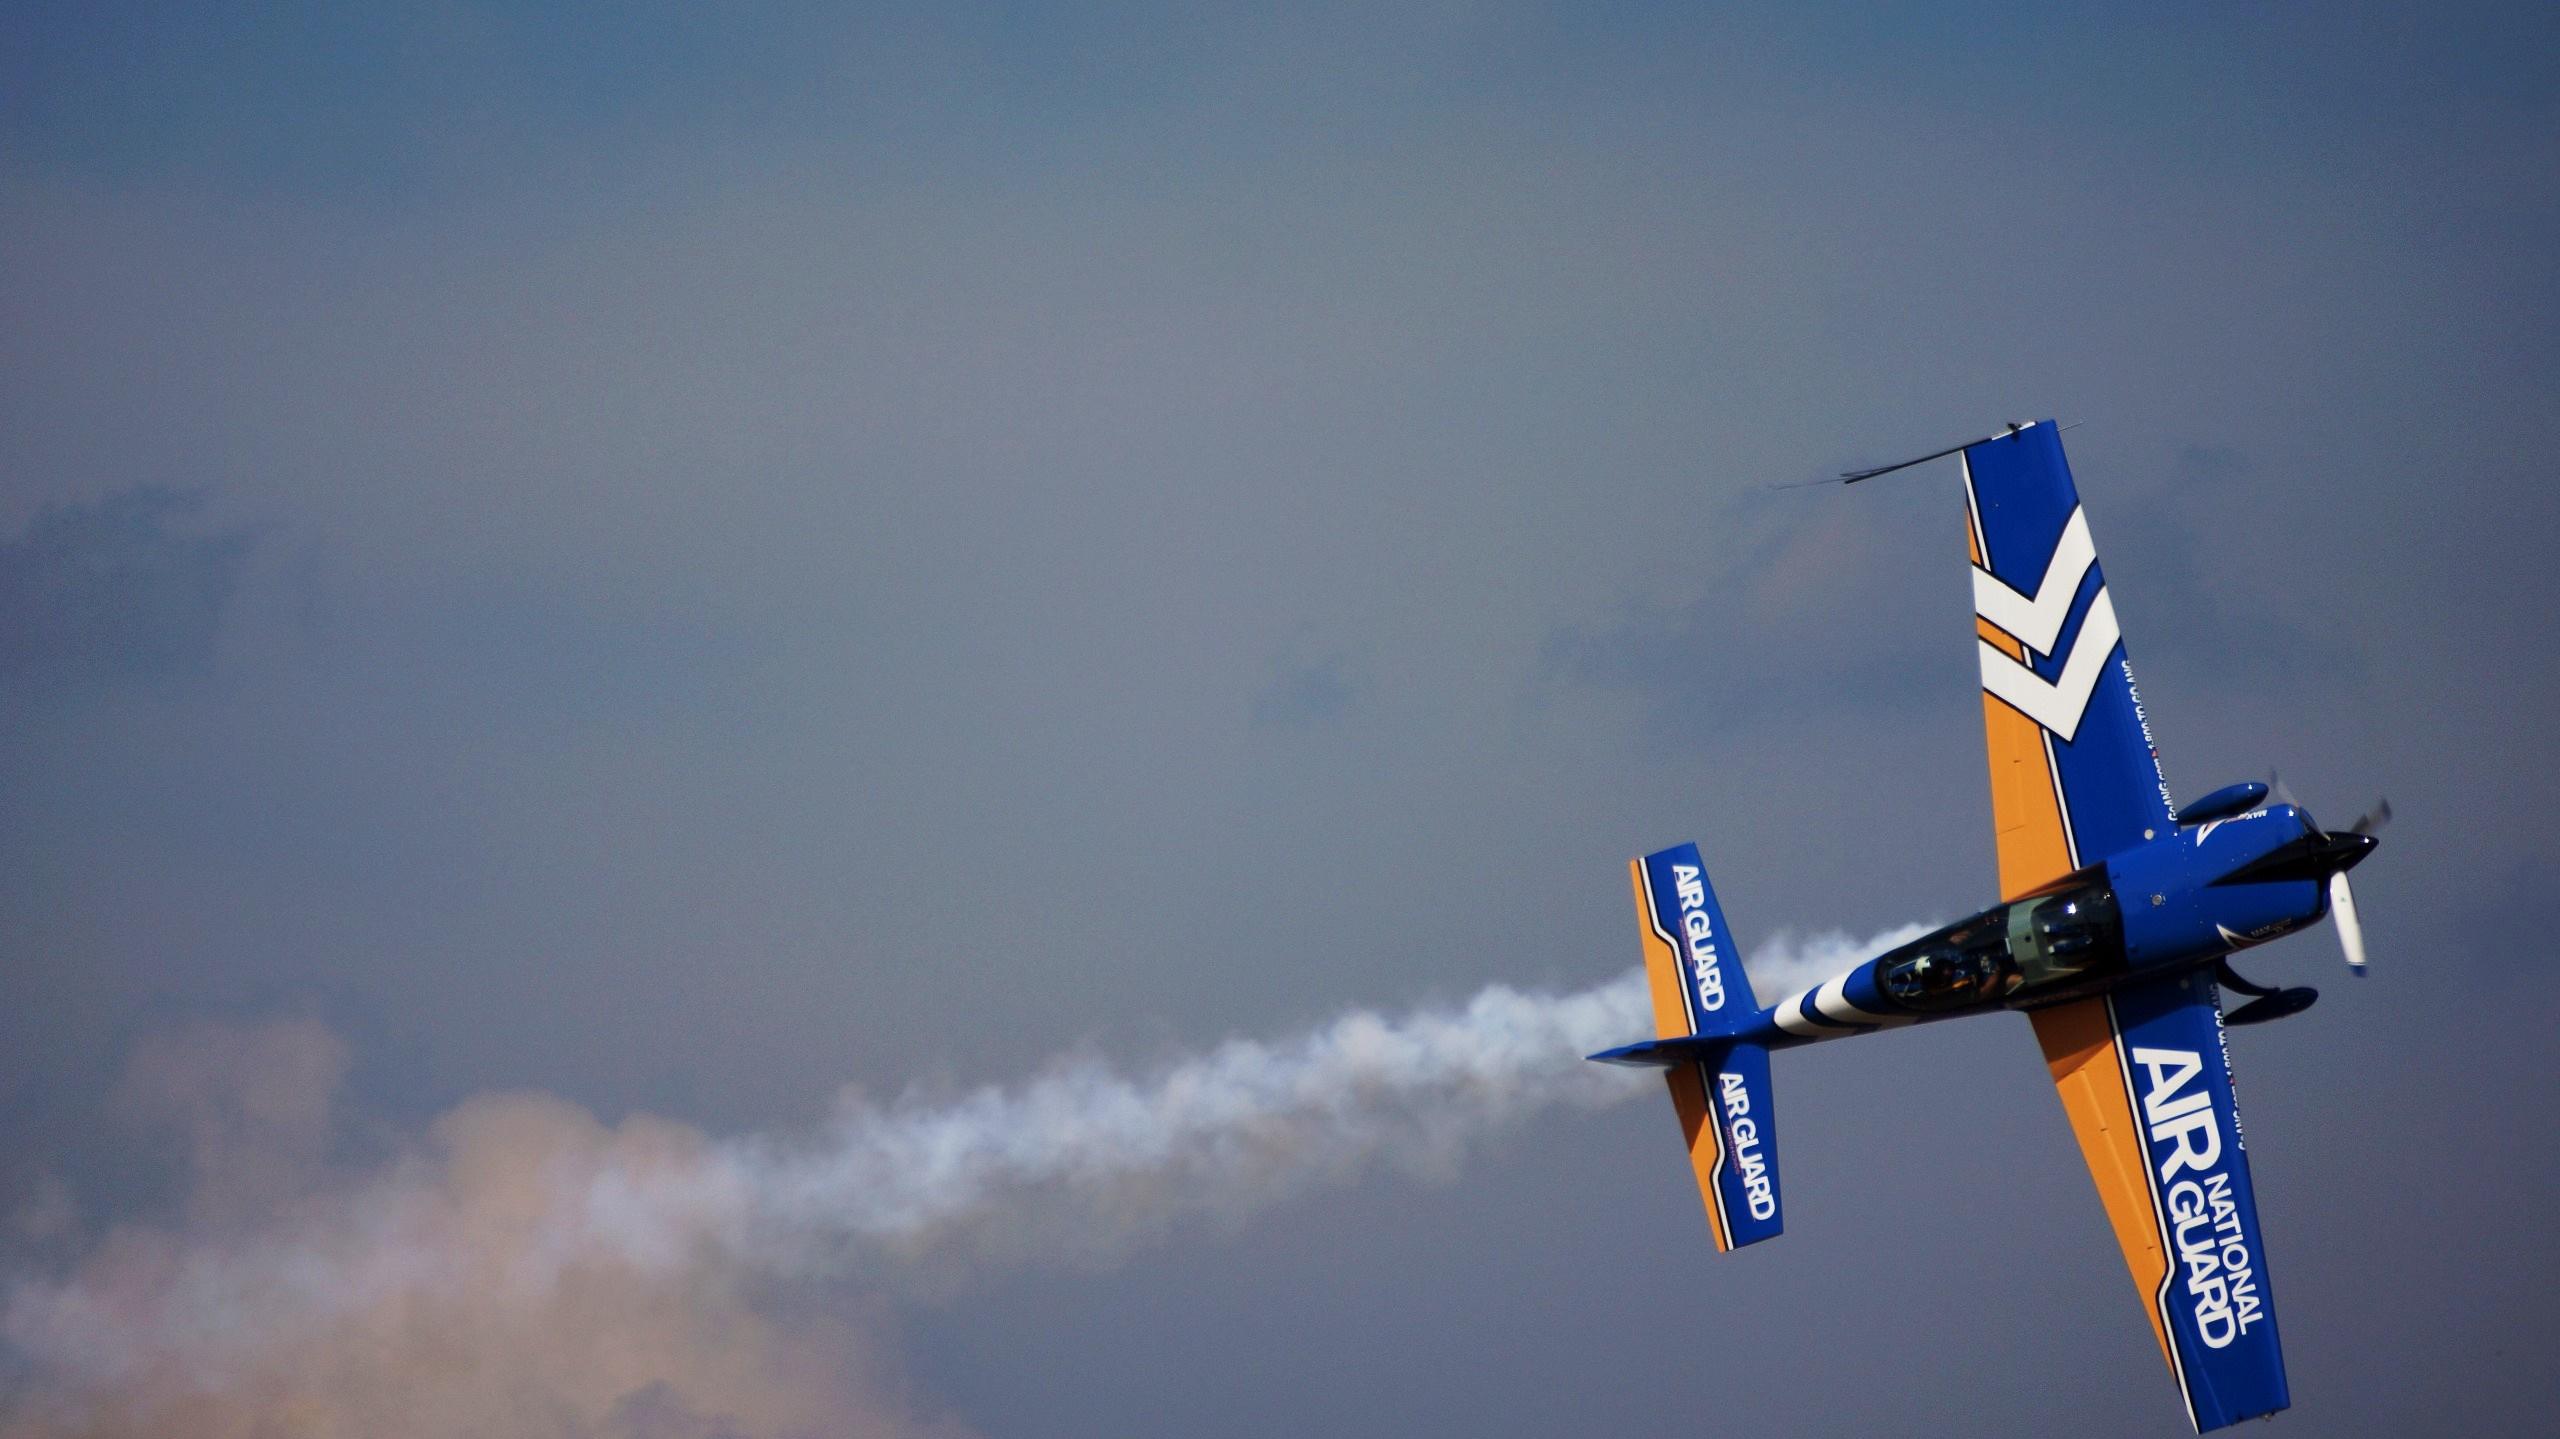 Sky Vehicle Airplane Aircraft Blue Stunts Airshows